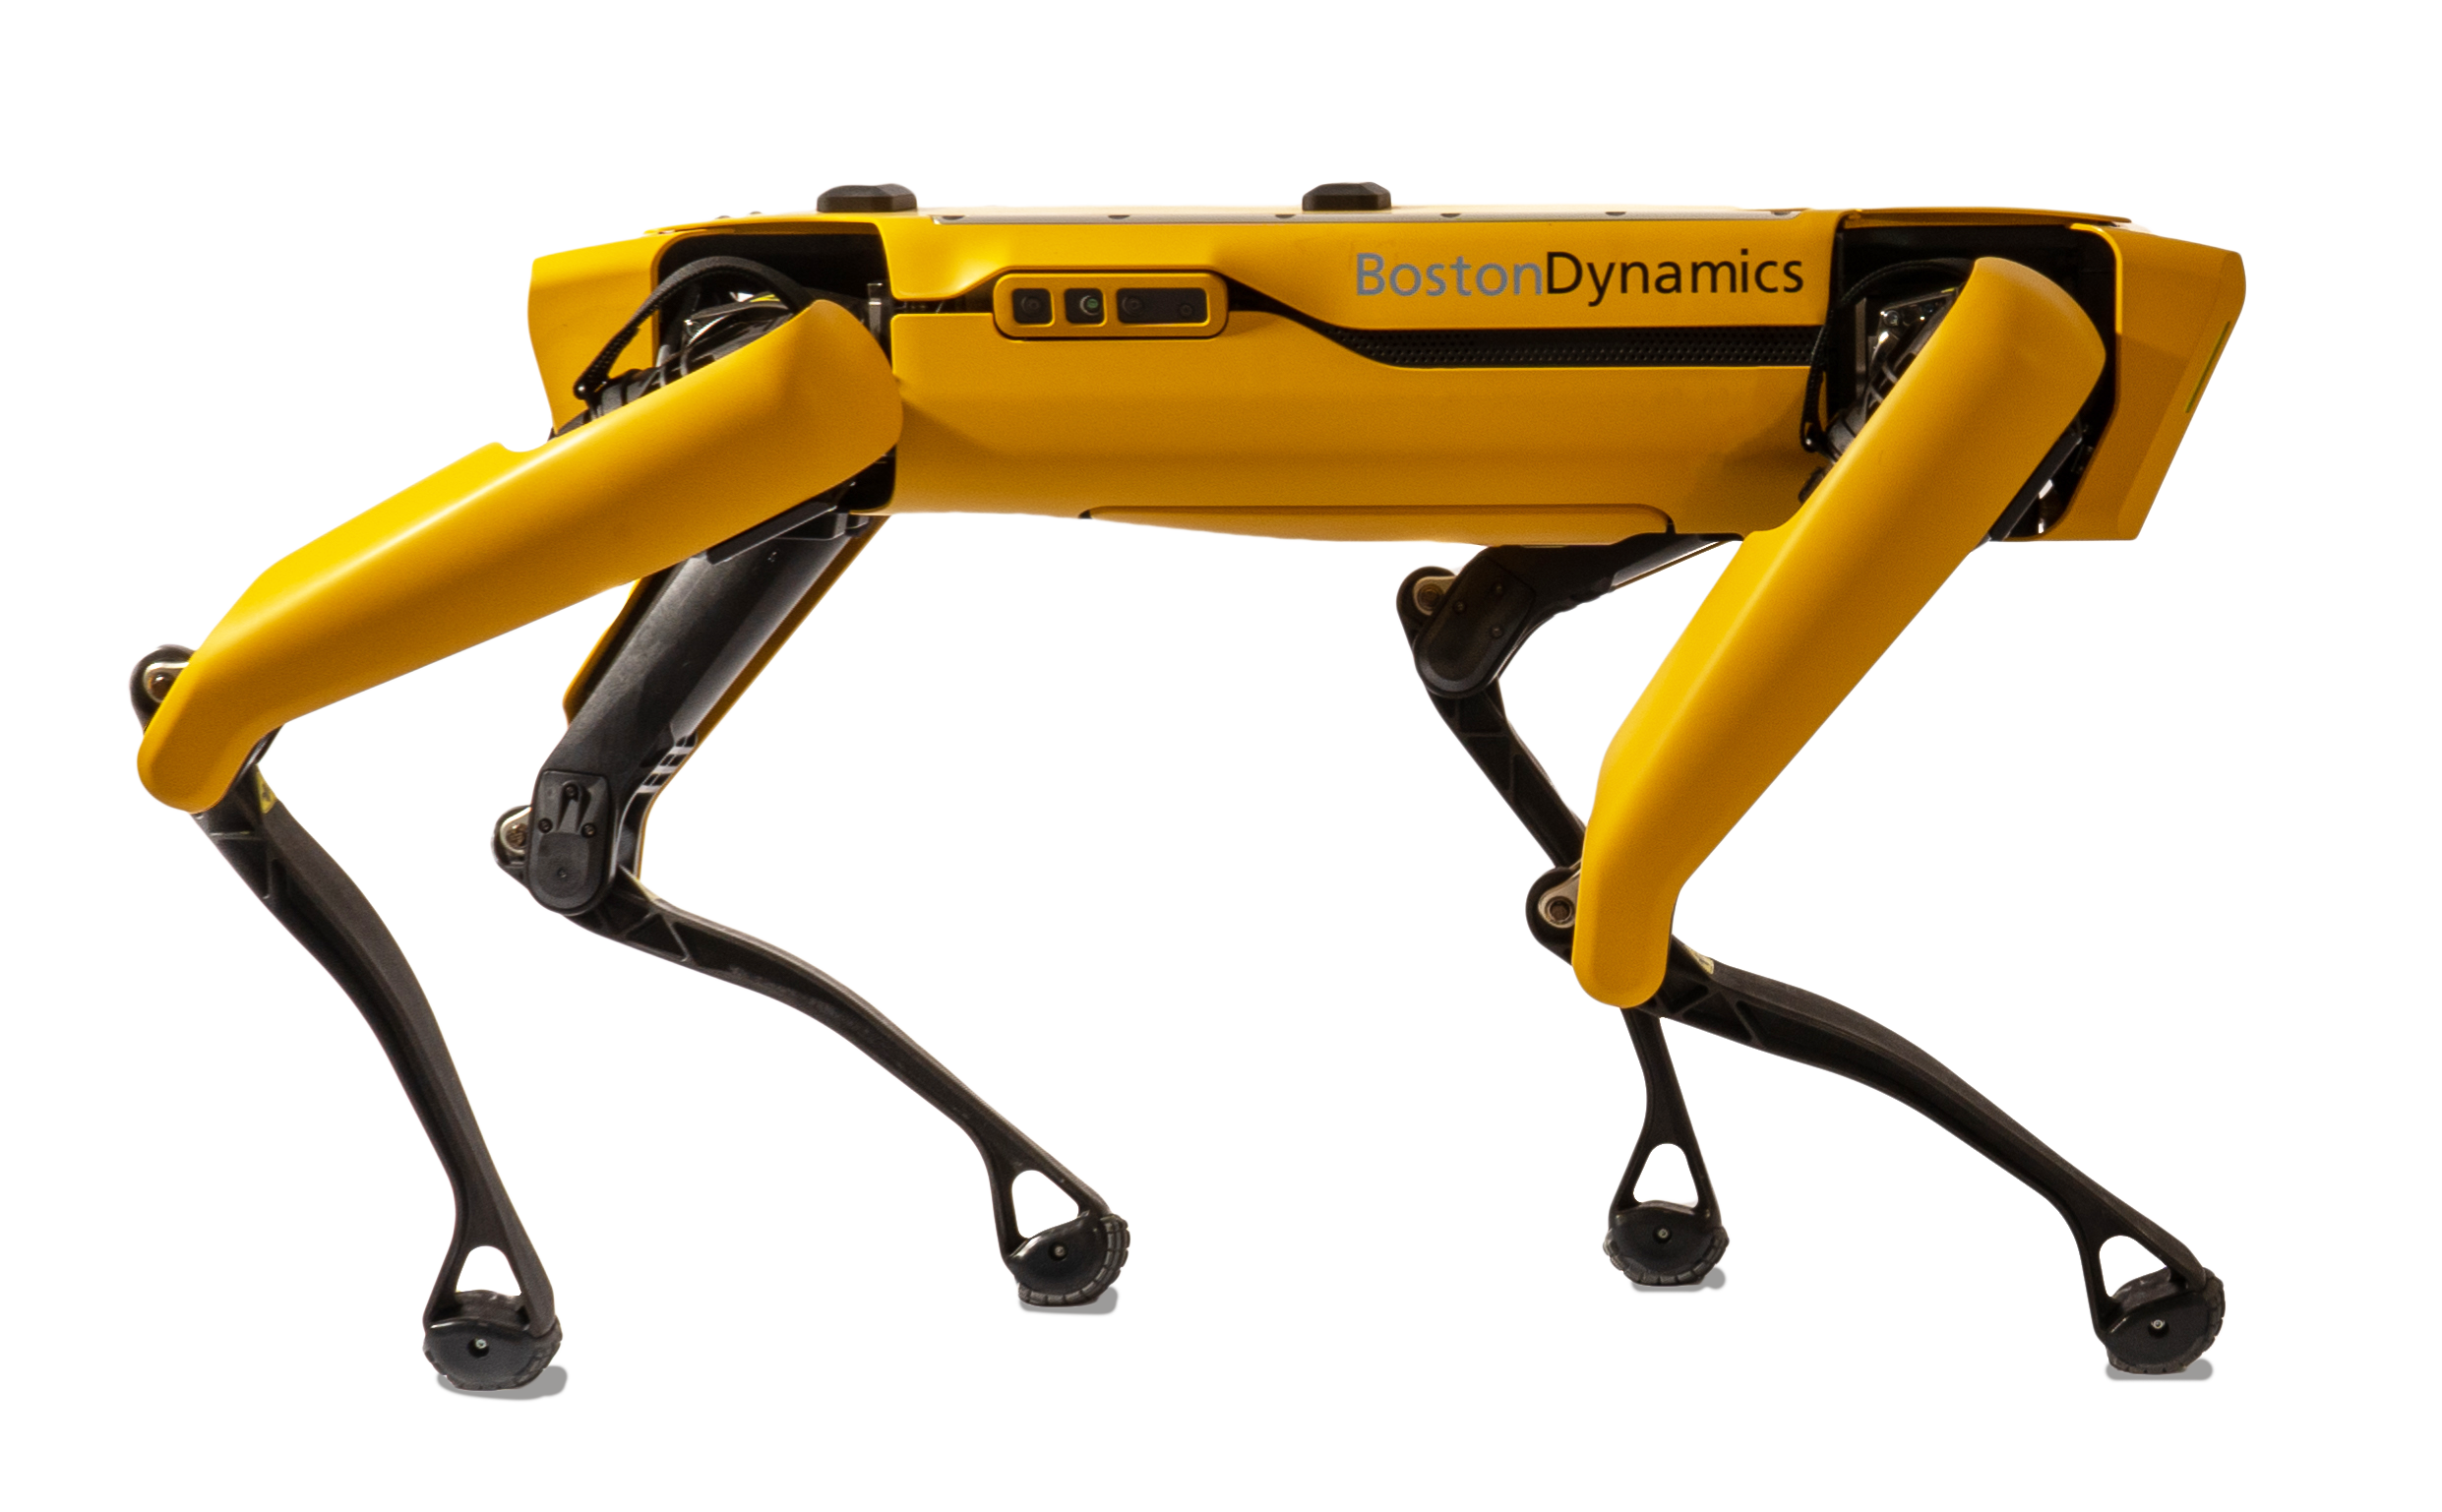 SpotMini-Boston Dynamics Robot Dog